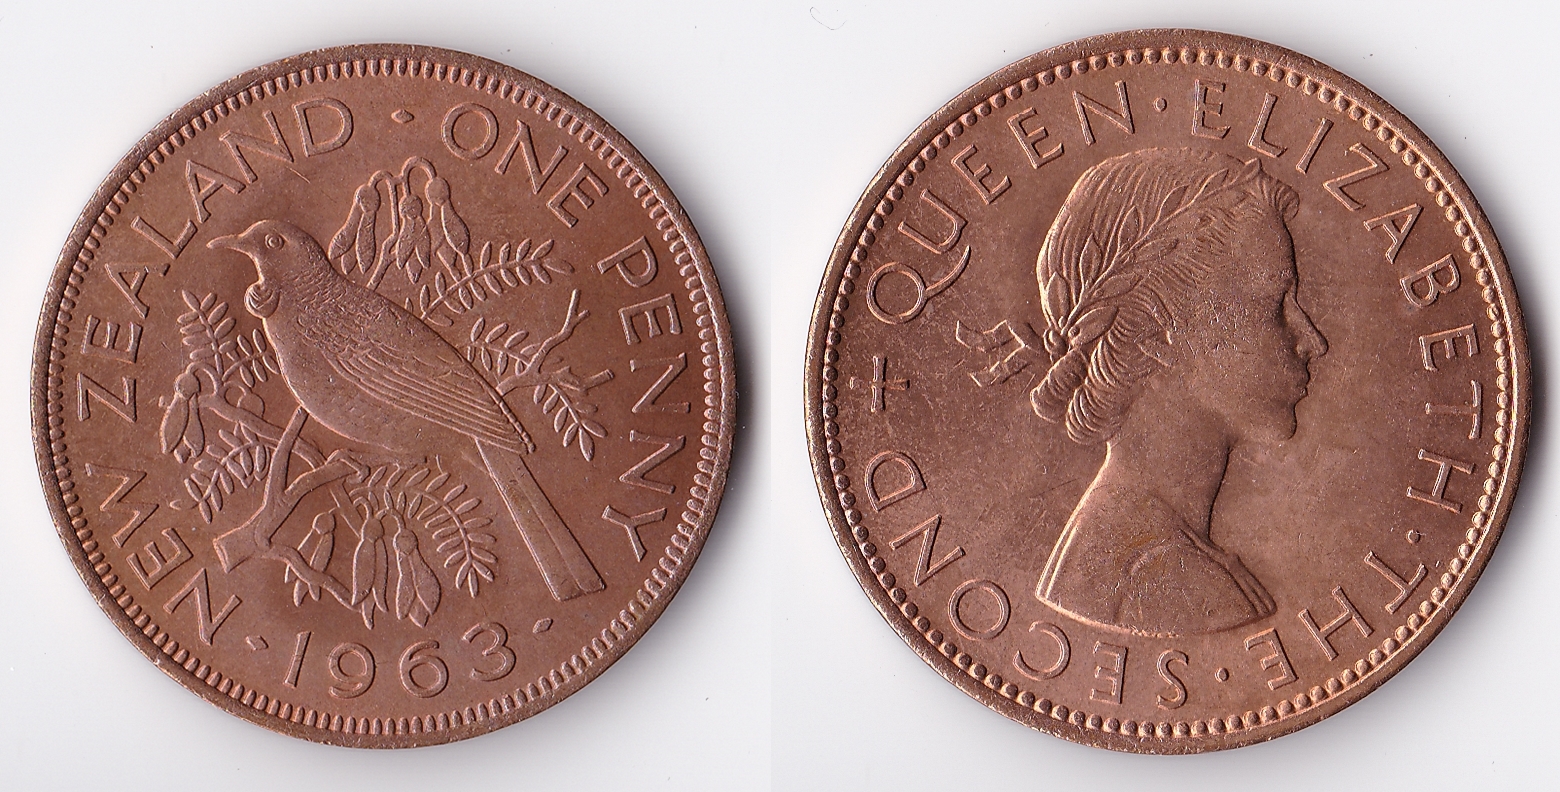 1963 new zealand 1 penny.jpg